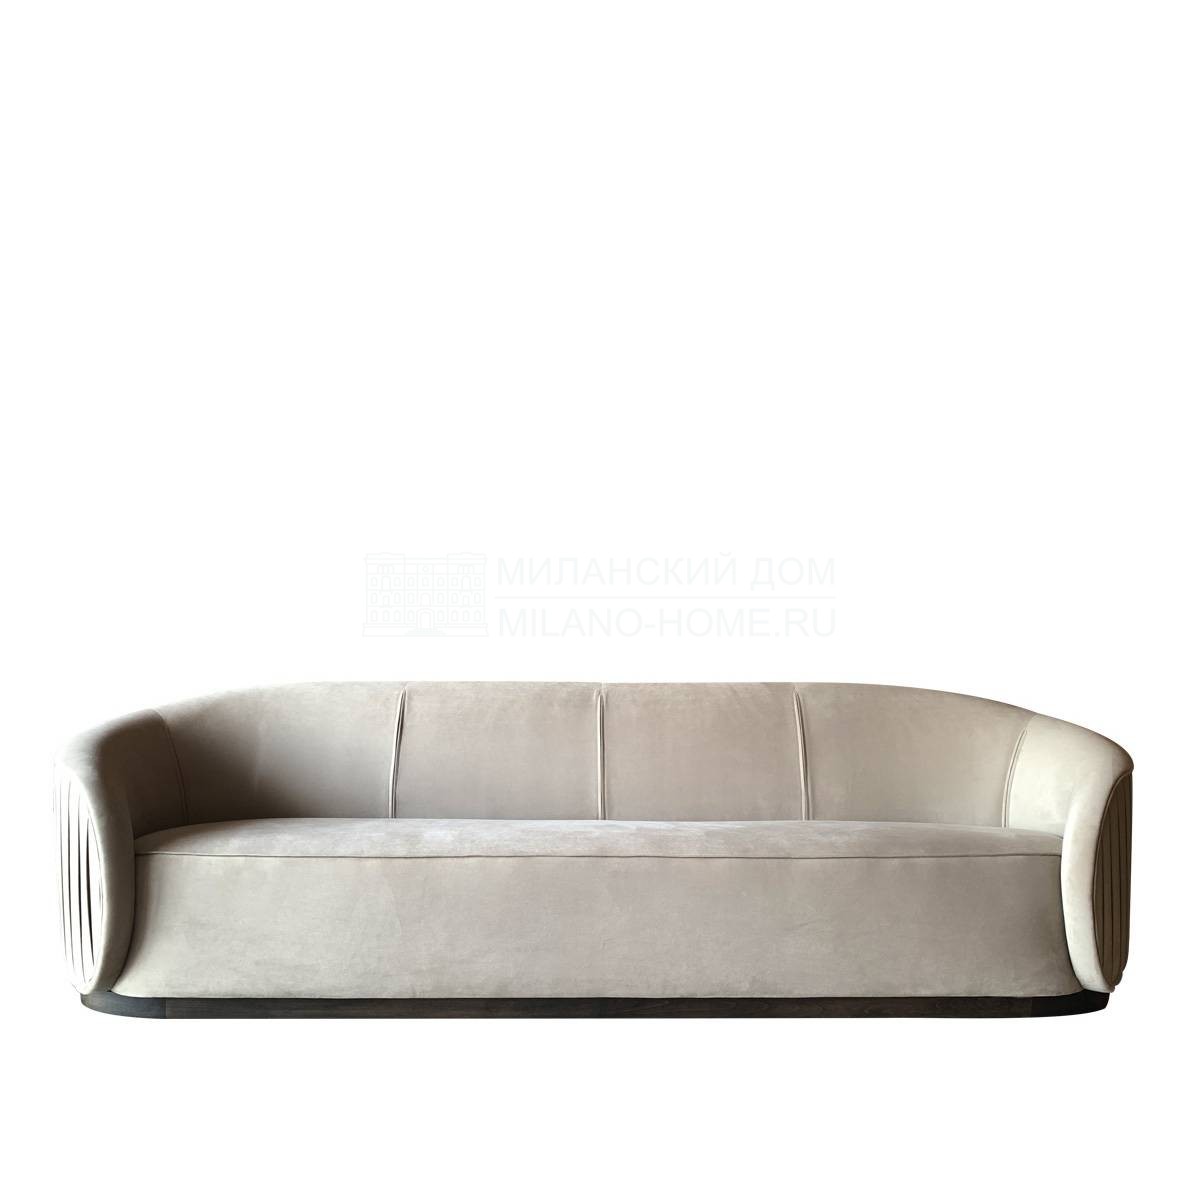 Прямой диван Abano sofa из Испании фабрики COLECCION ALEXANDRA